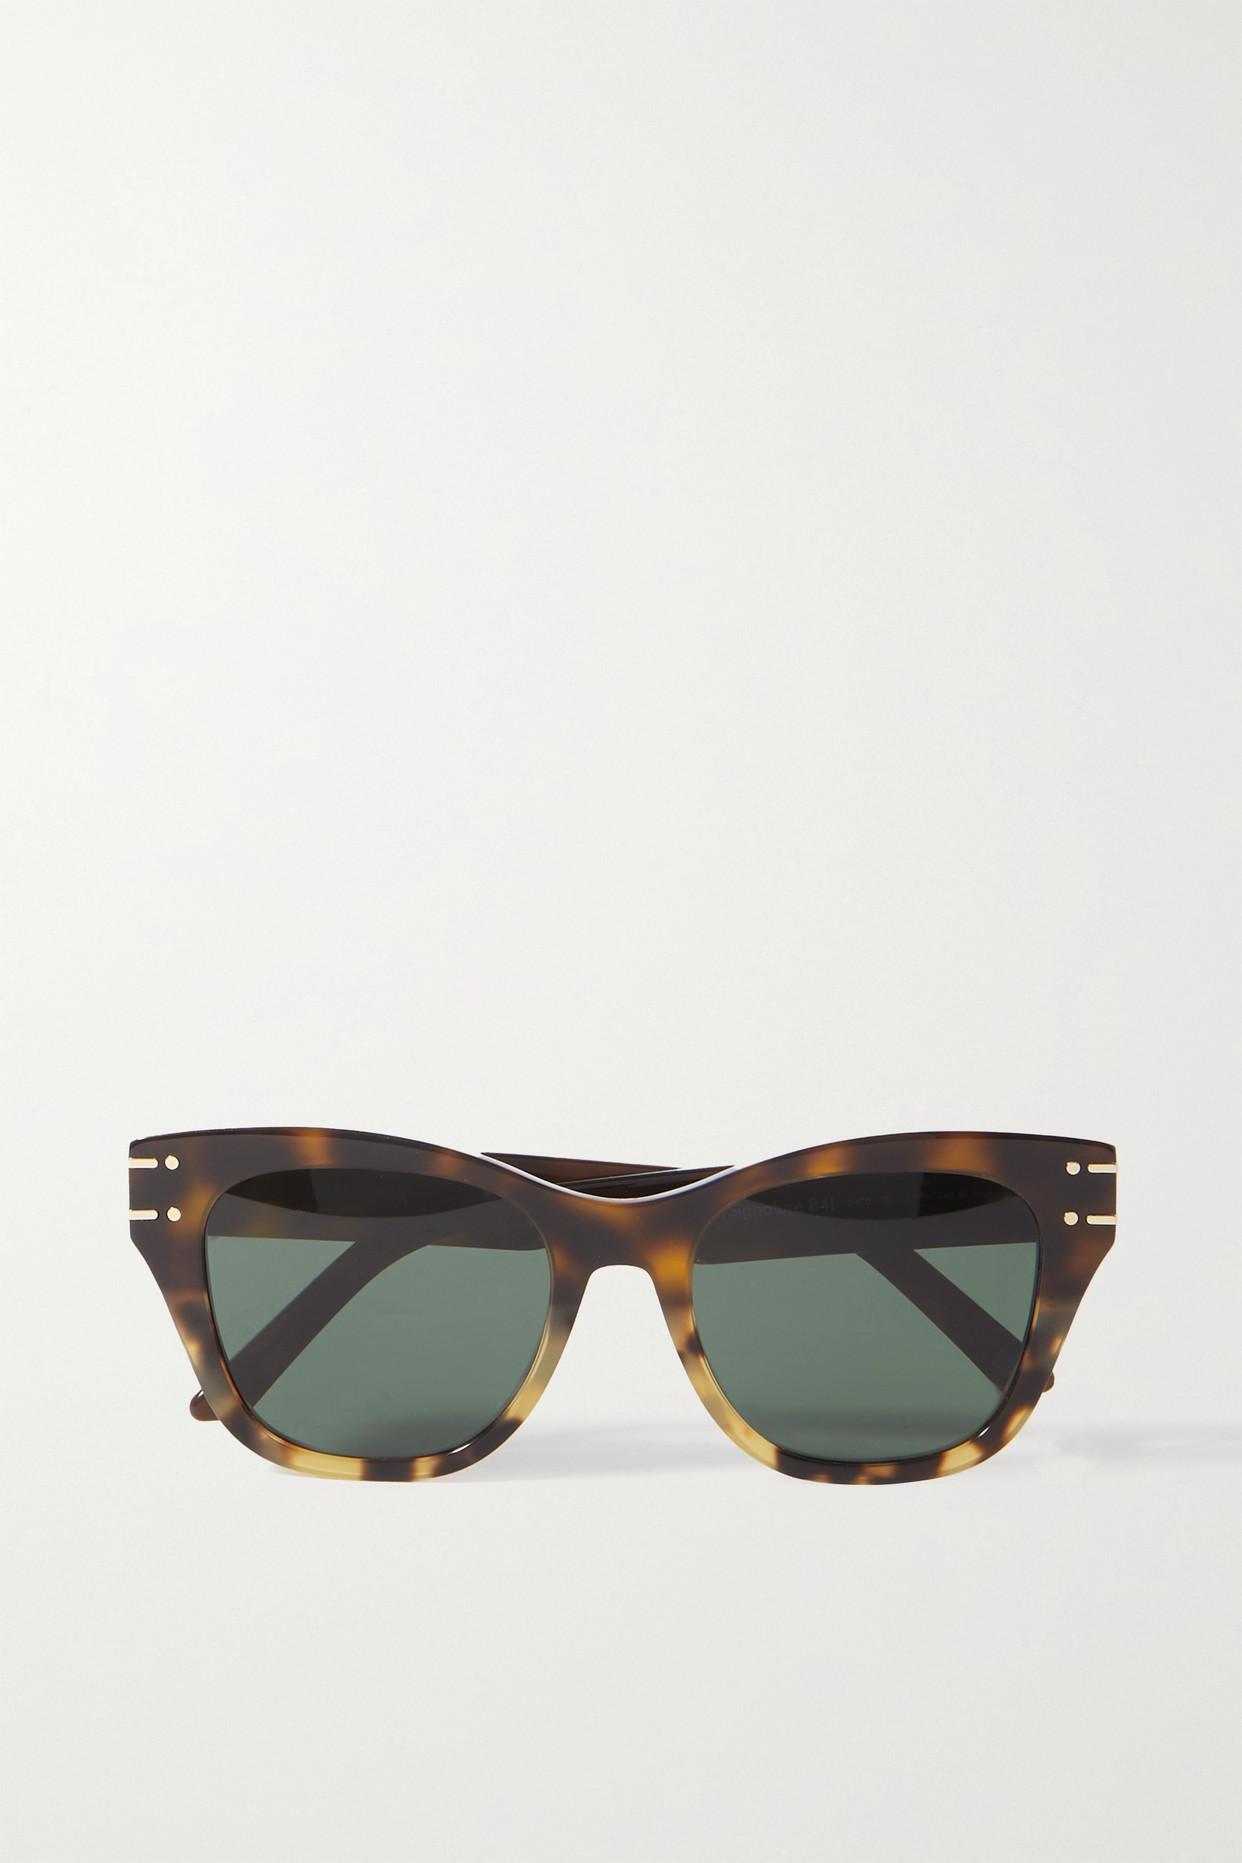 Dior Diorsignature B4i Square-frame Tortoiseshell Acetate Sunglasses | Lyst